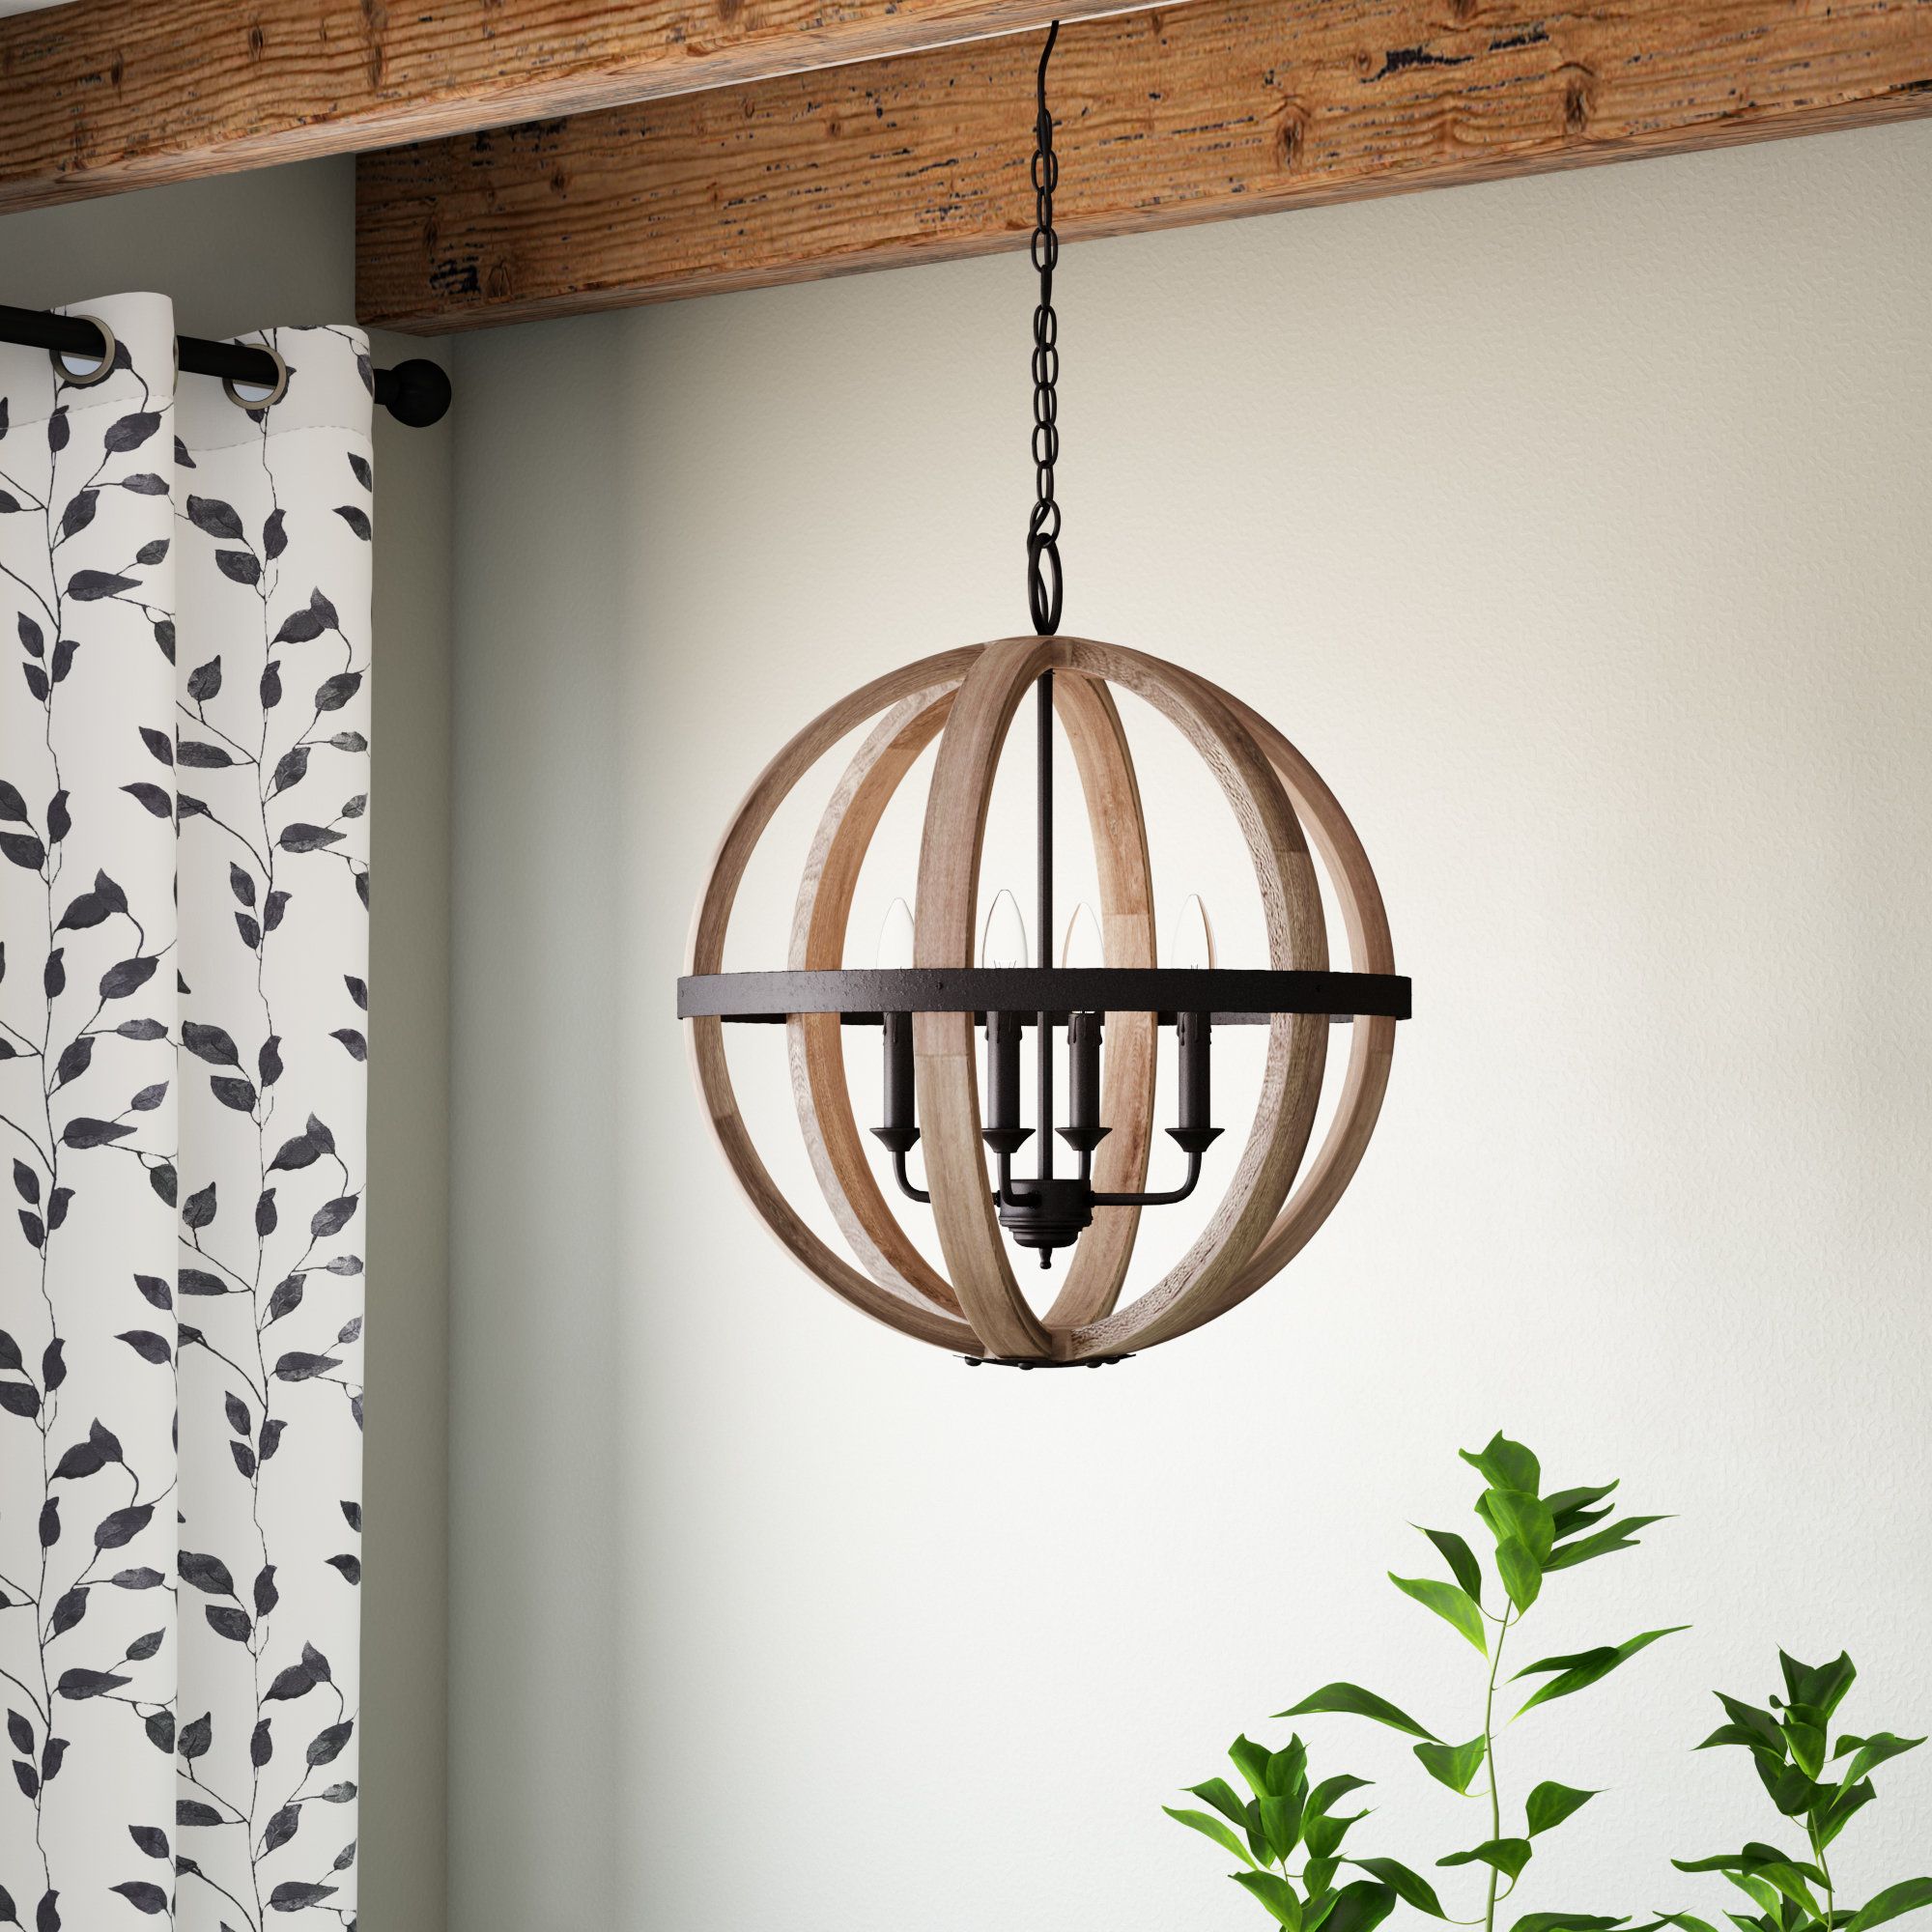 Gracie Oaks Caley 4 Light Globe Chandelier & Reviews | Wayfair Throughout Donna 4 Light Globe Chandeliers (View 12 of 30)